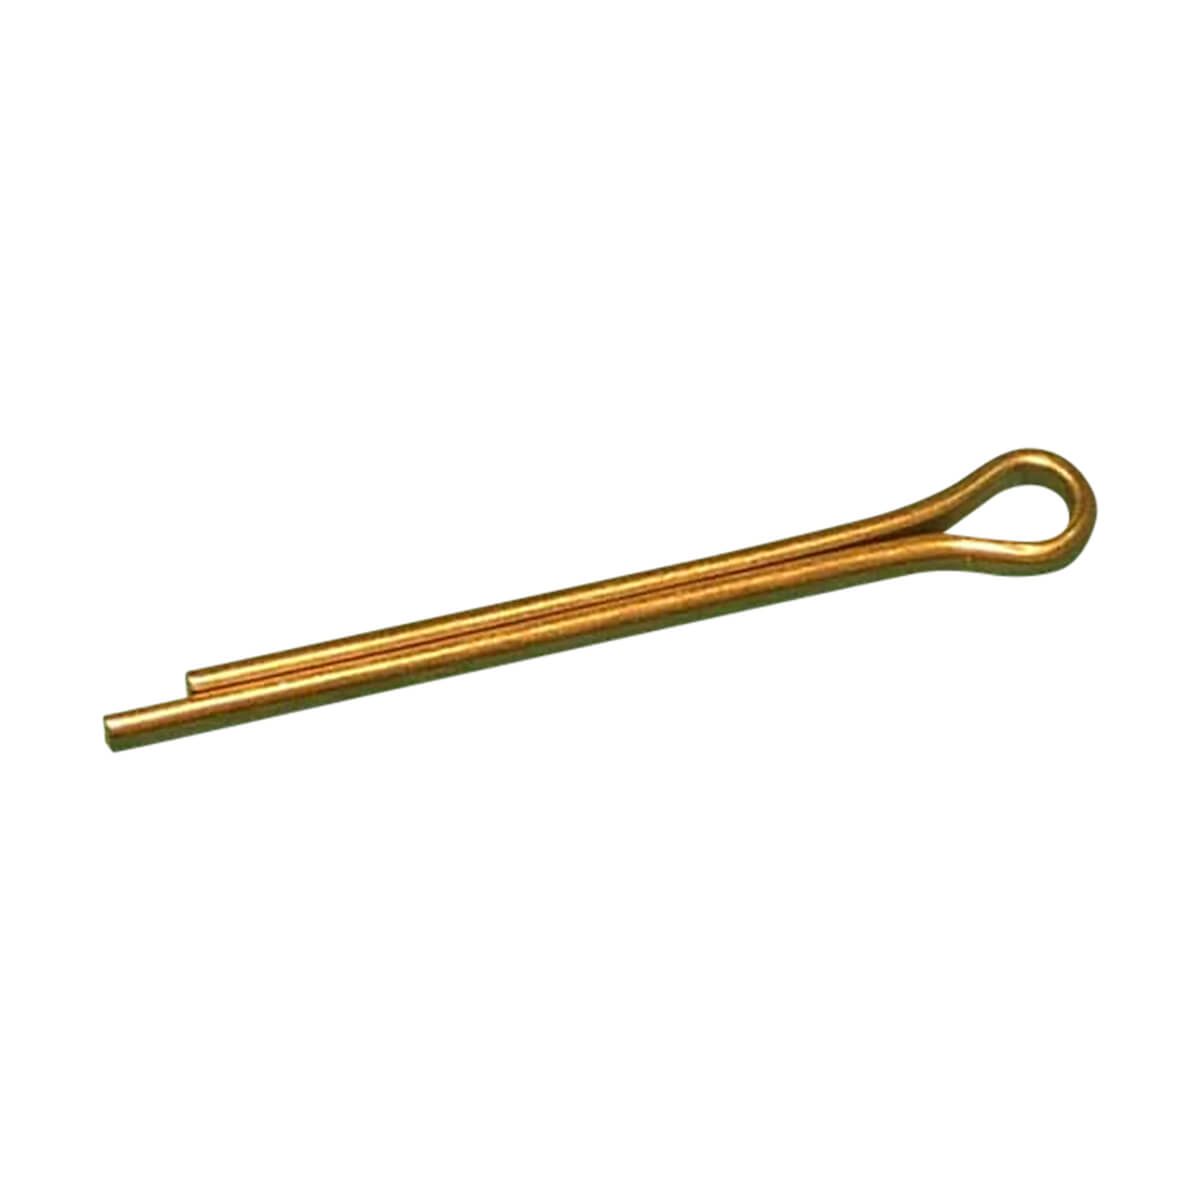 Brass Valve Cotter Pin